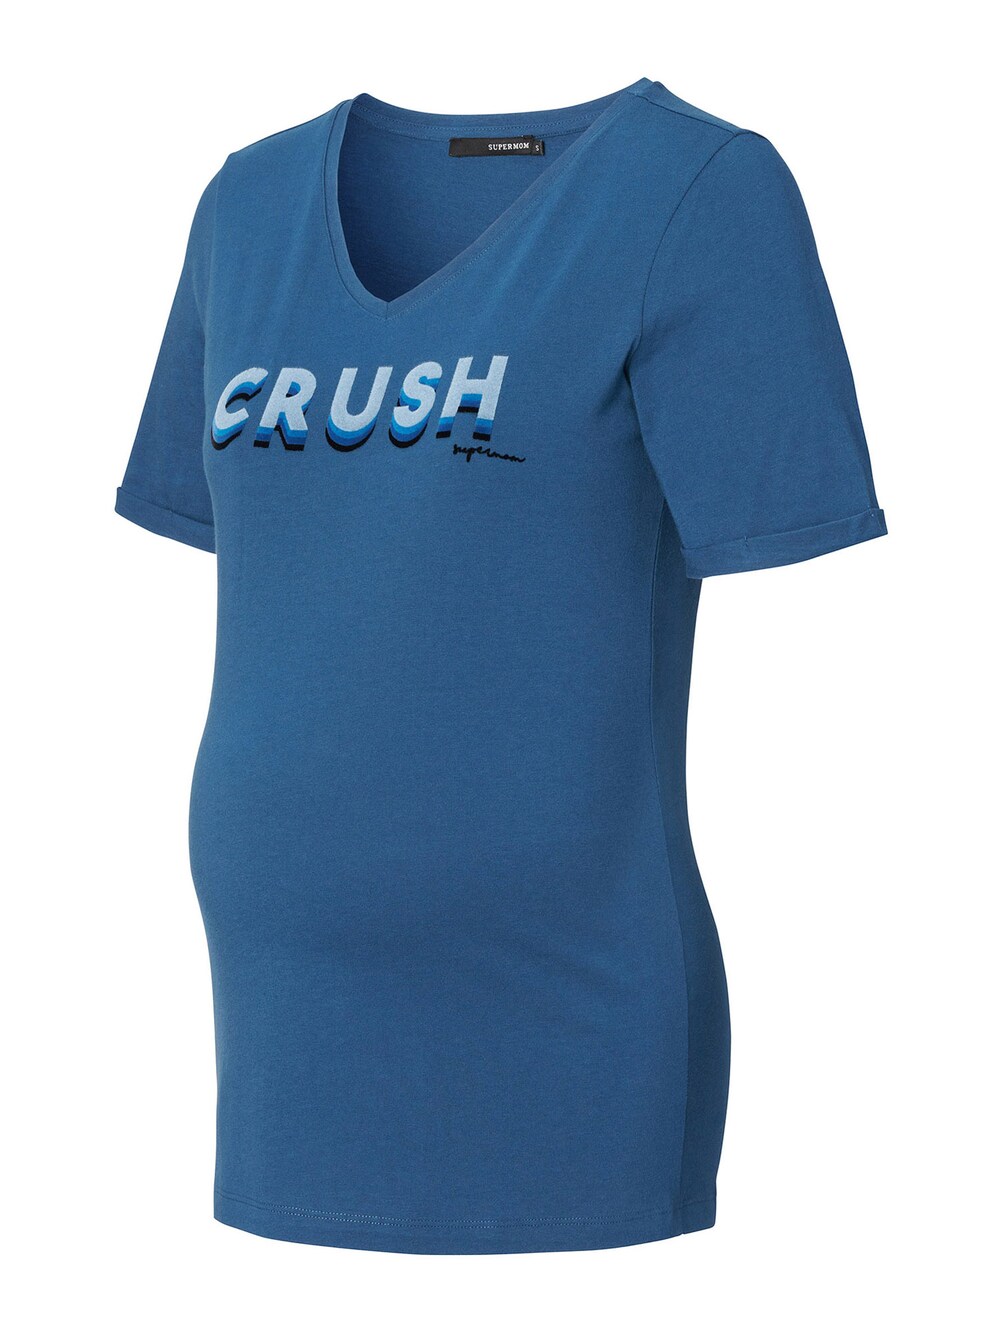 Рубашка Supermom Crush, синий/темно-синий/королевский синий/голубой printio кружка королевский синий